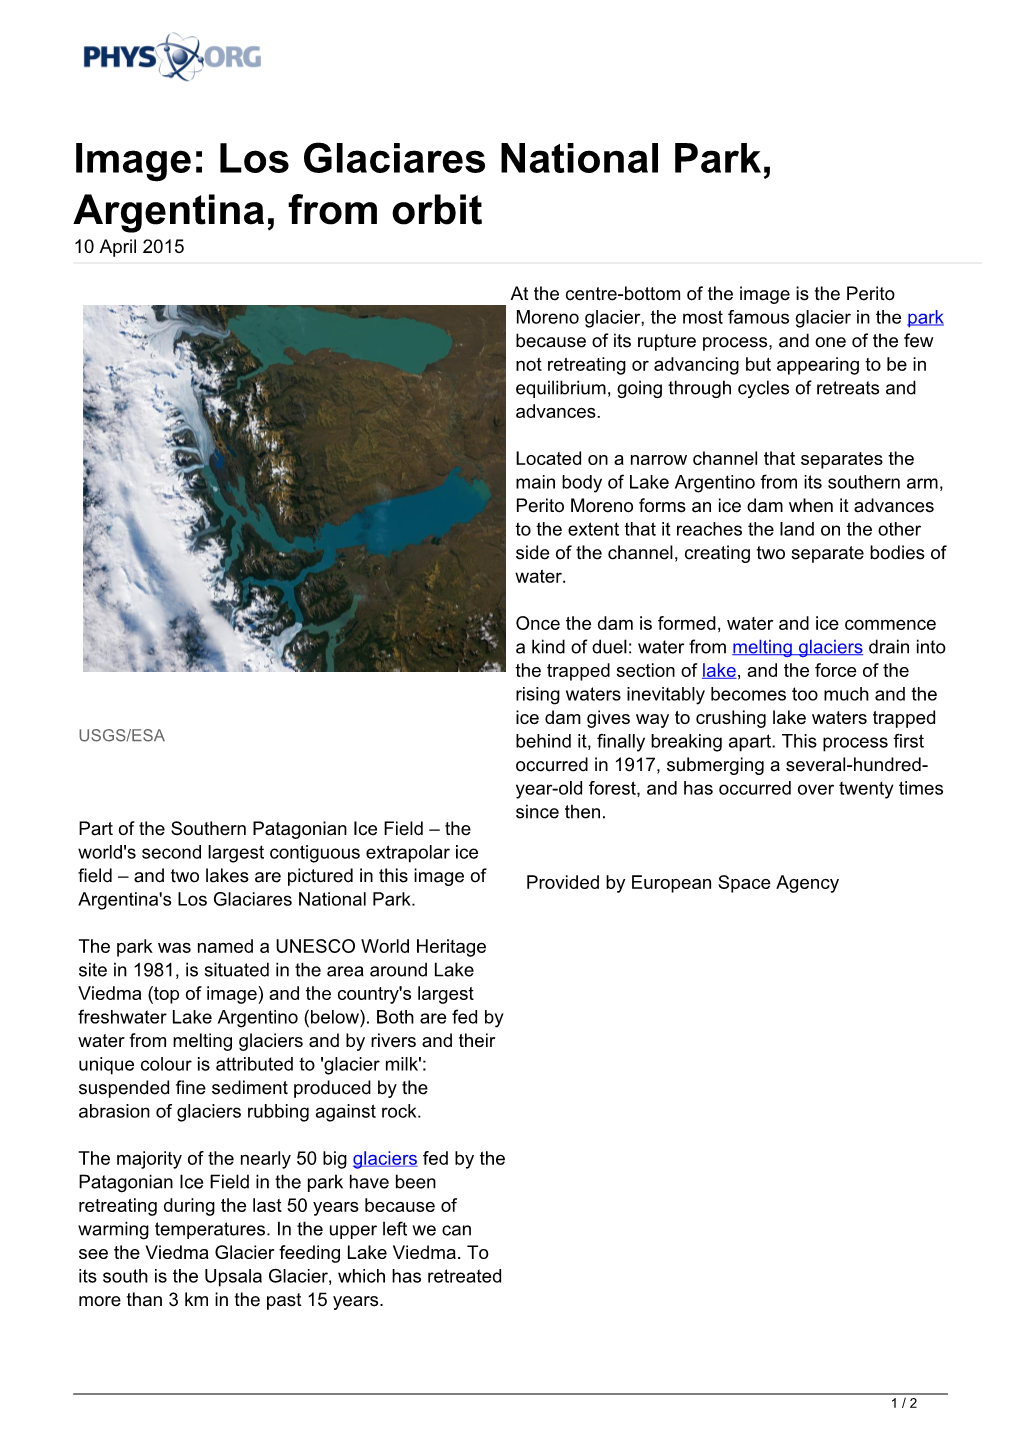 Image: Los Glaciares National Park, Argentina, from Orbit 10 April 2015